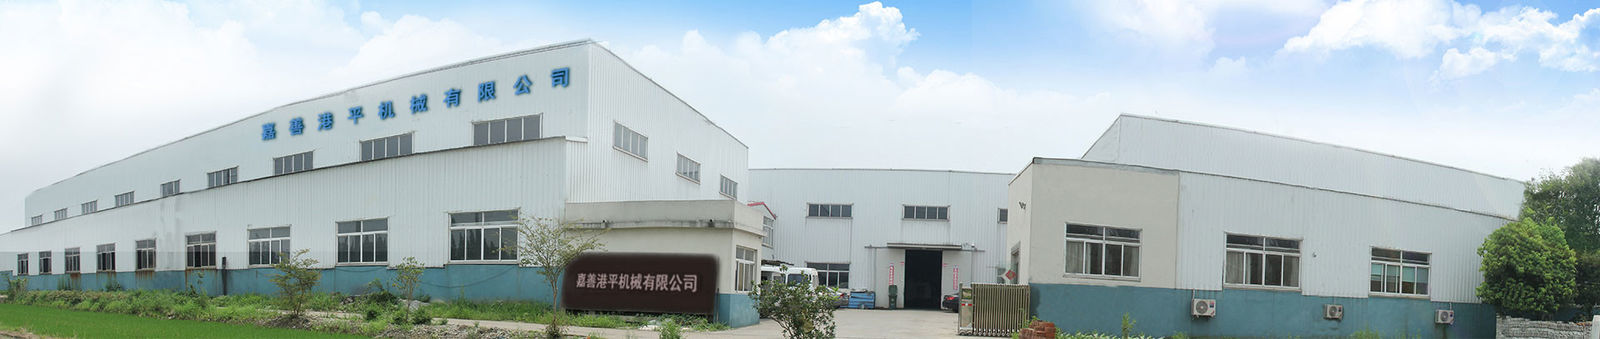 China Jiashan Gangping Machinery Co., Ltd. company profile